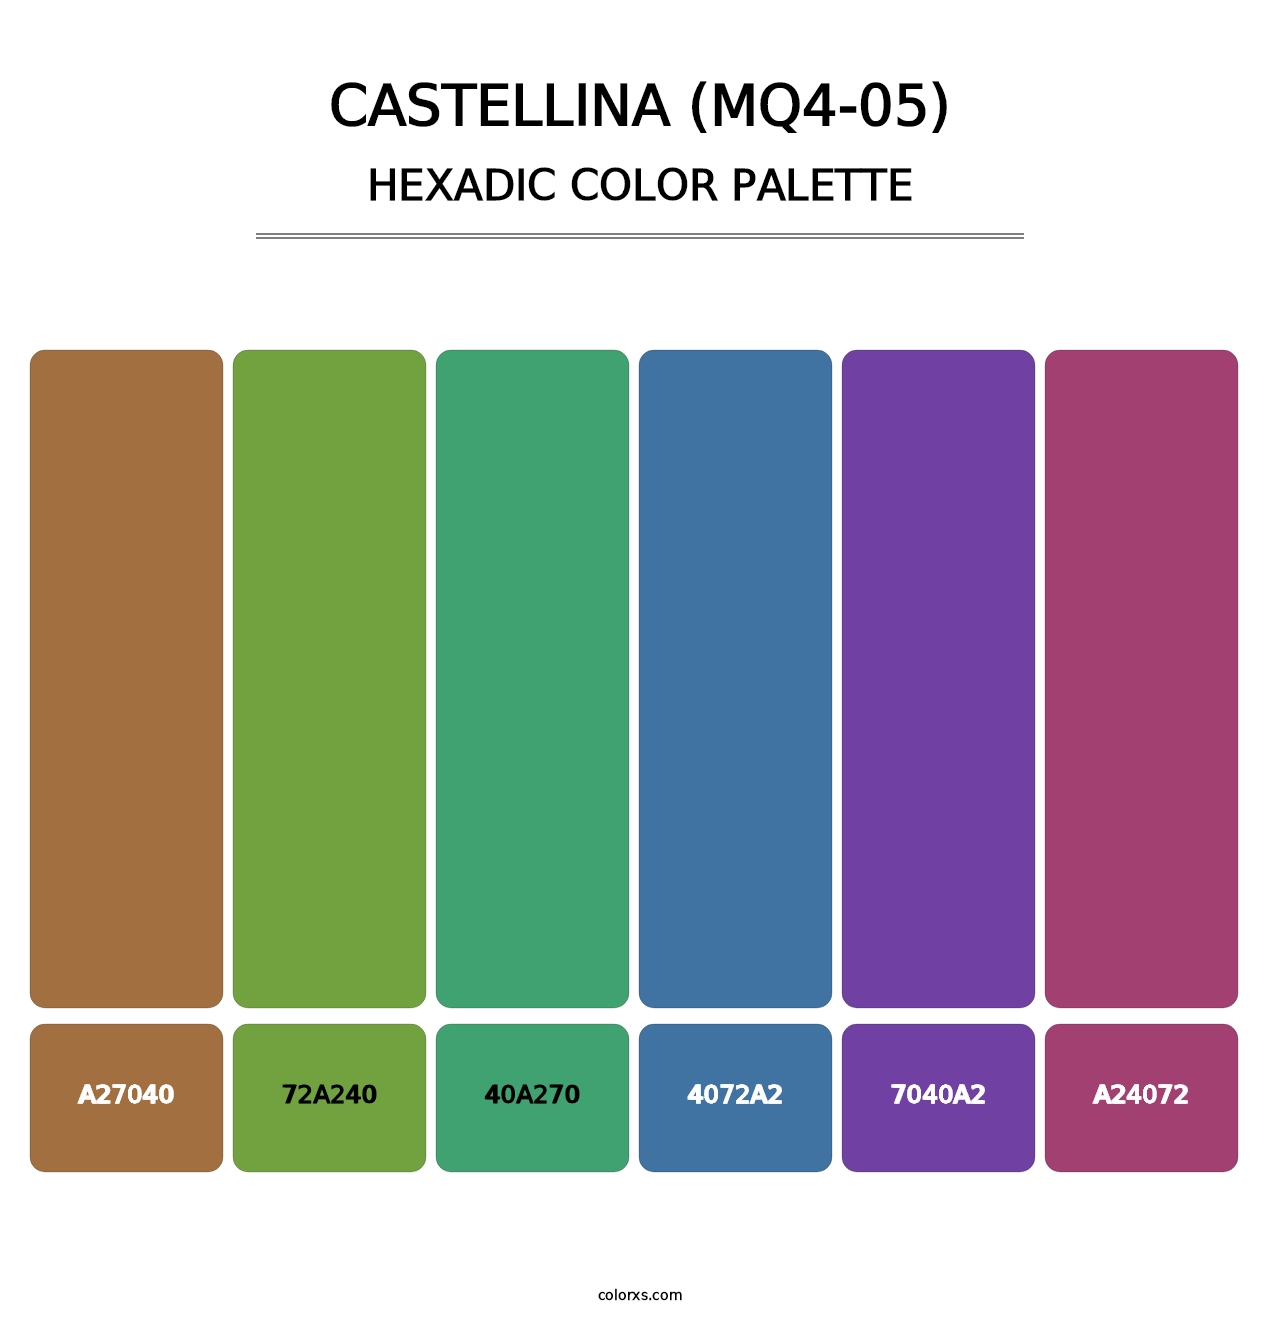 Castellina (MQ4-05) - Hexadic Color Palette